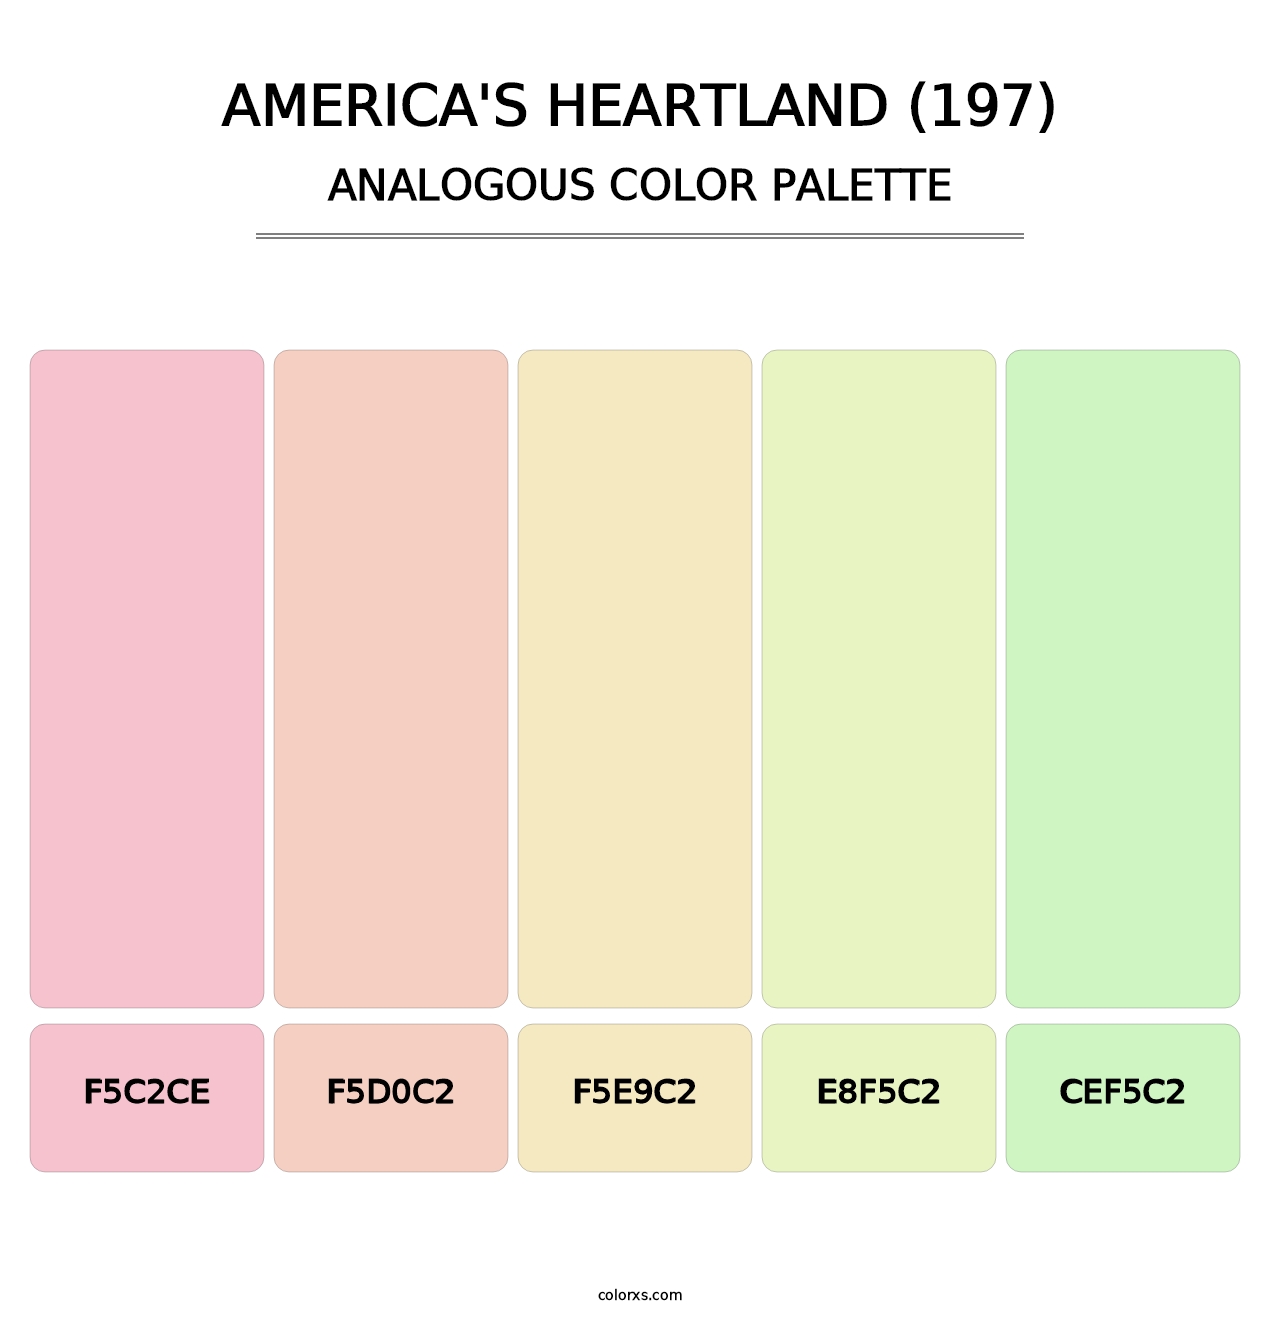 America's Heartland (197) - Analogous Color Palette